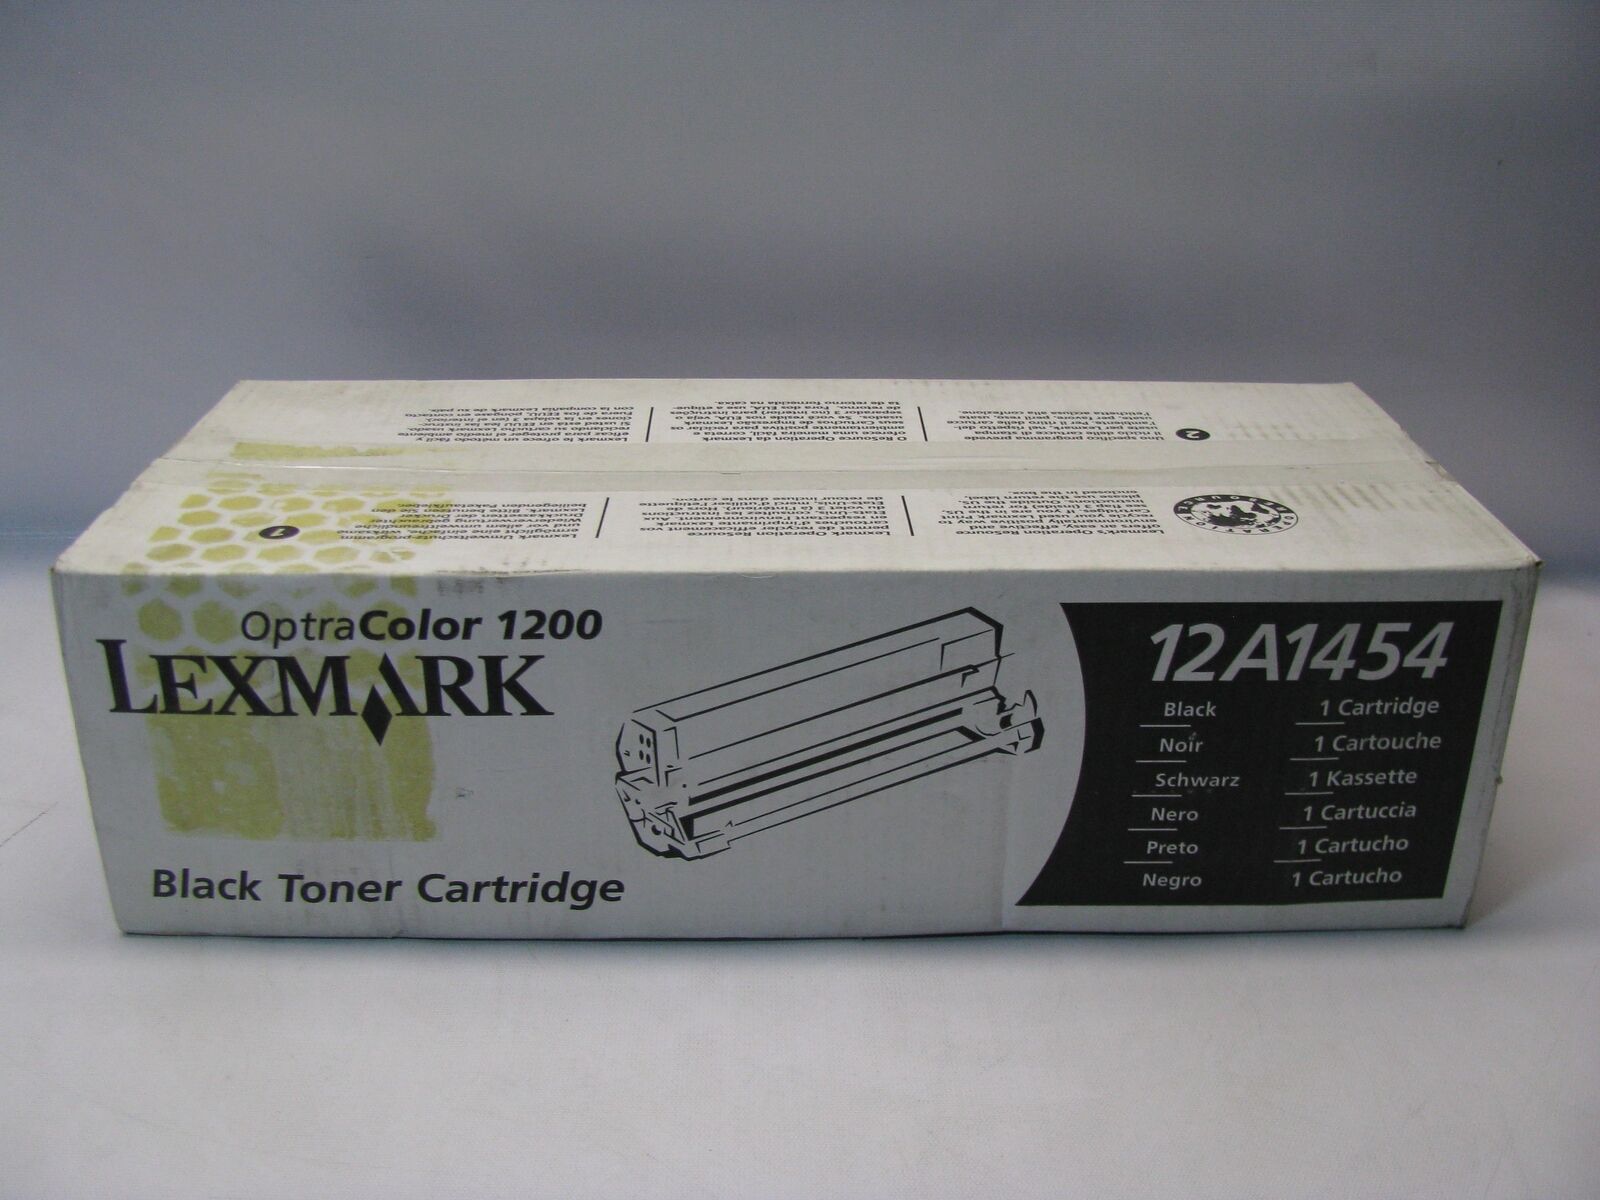 Lexmark 12A1454 Black Toner Tucson Mall Grade Max 76% OFF C